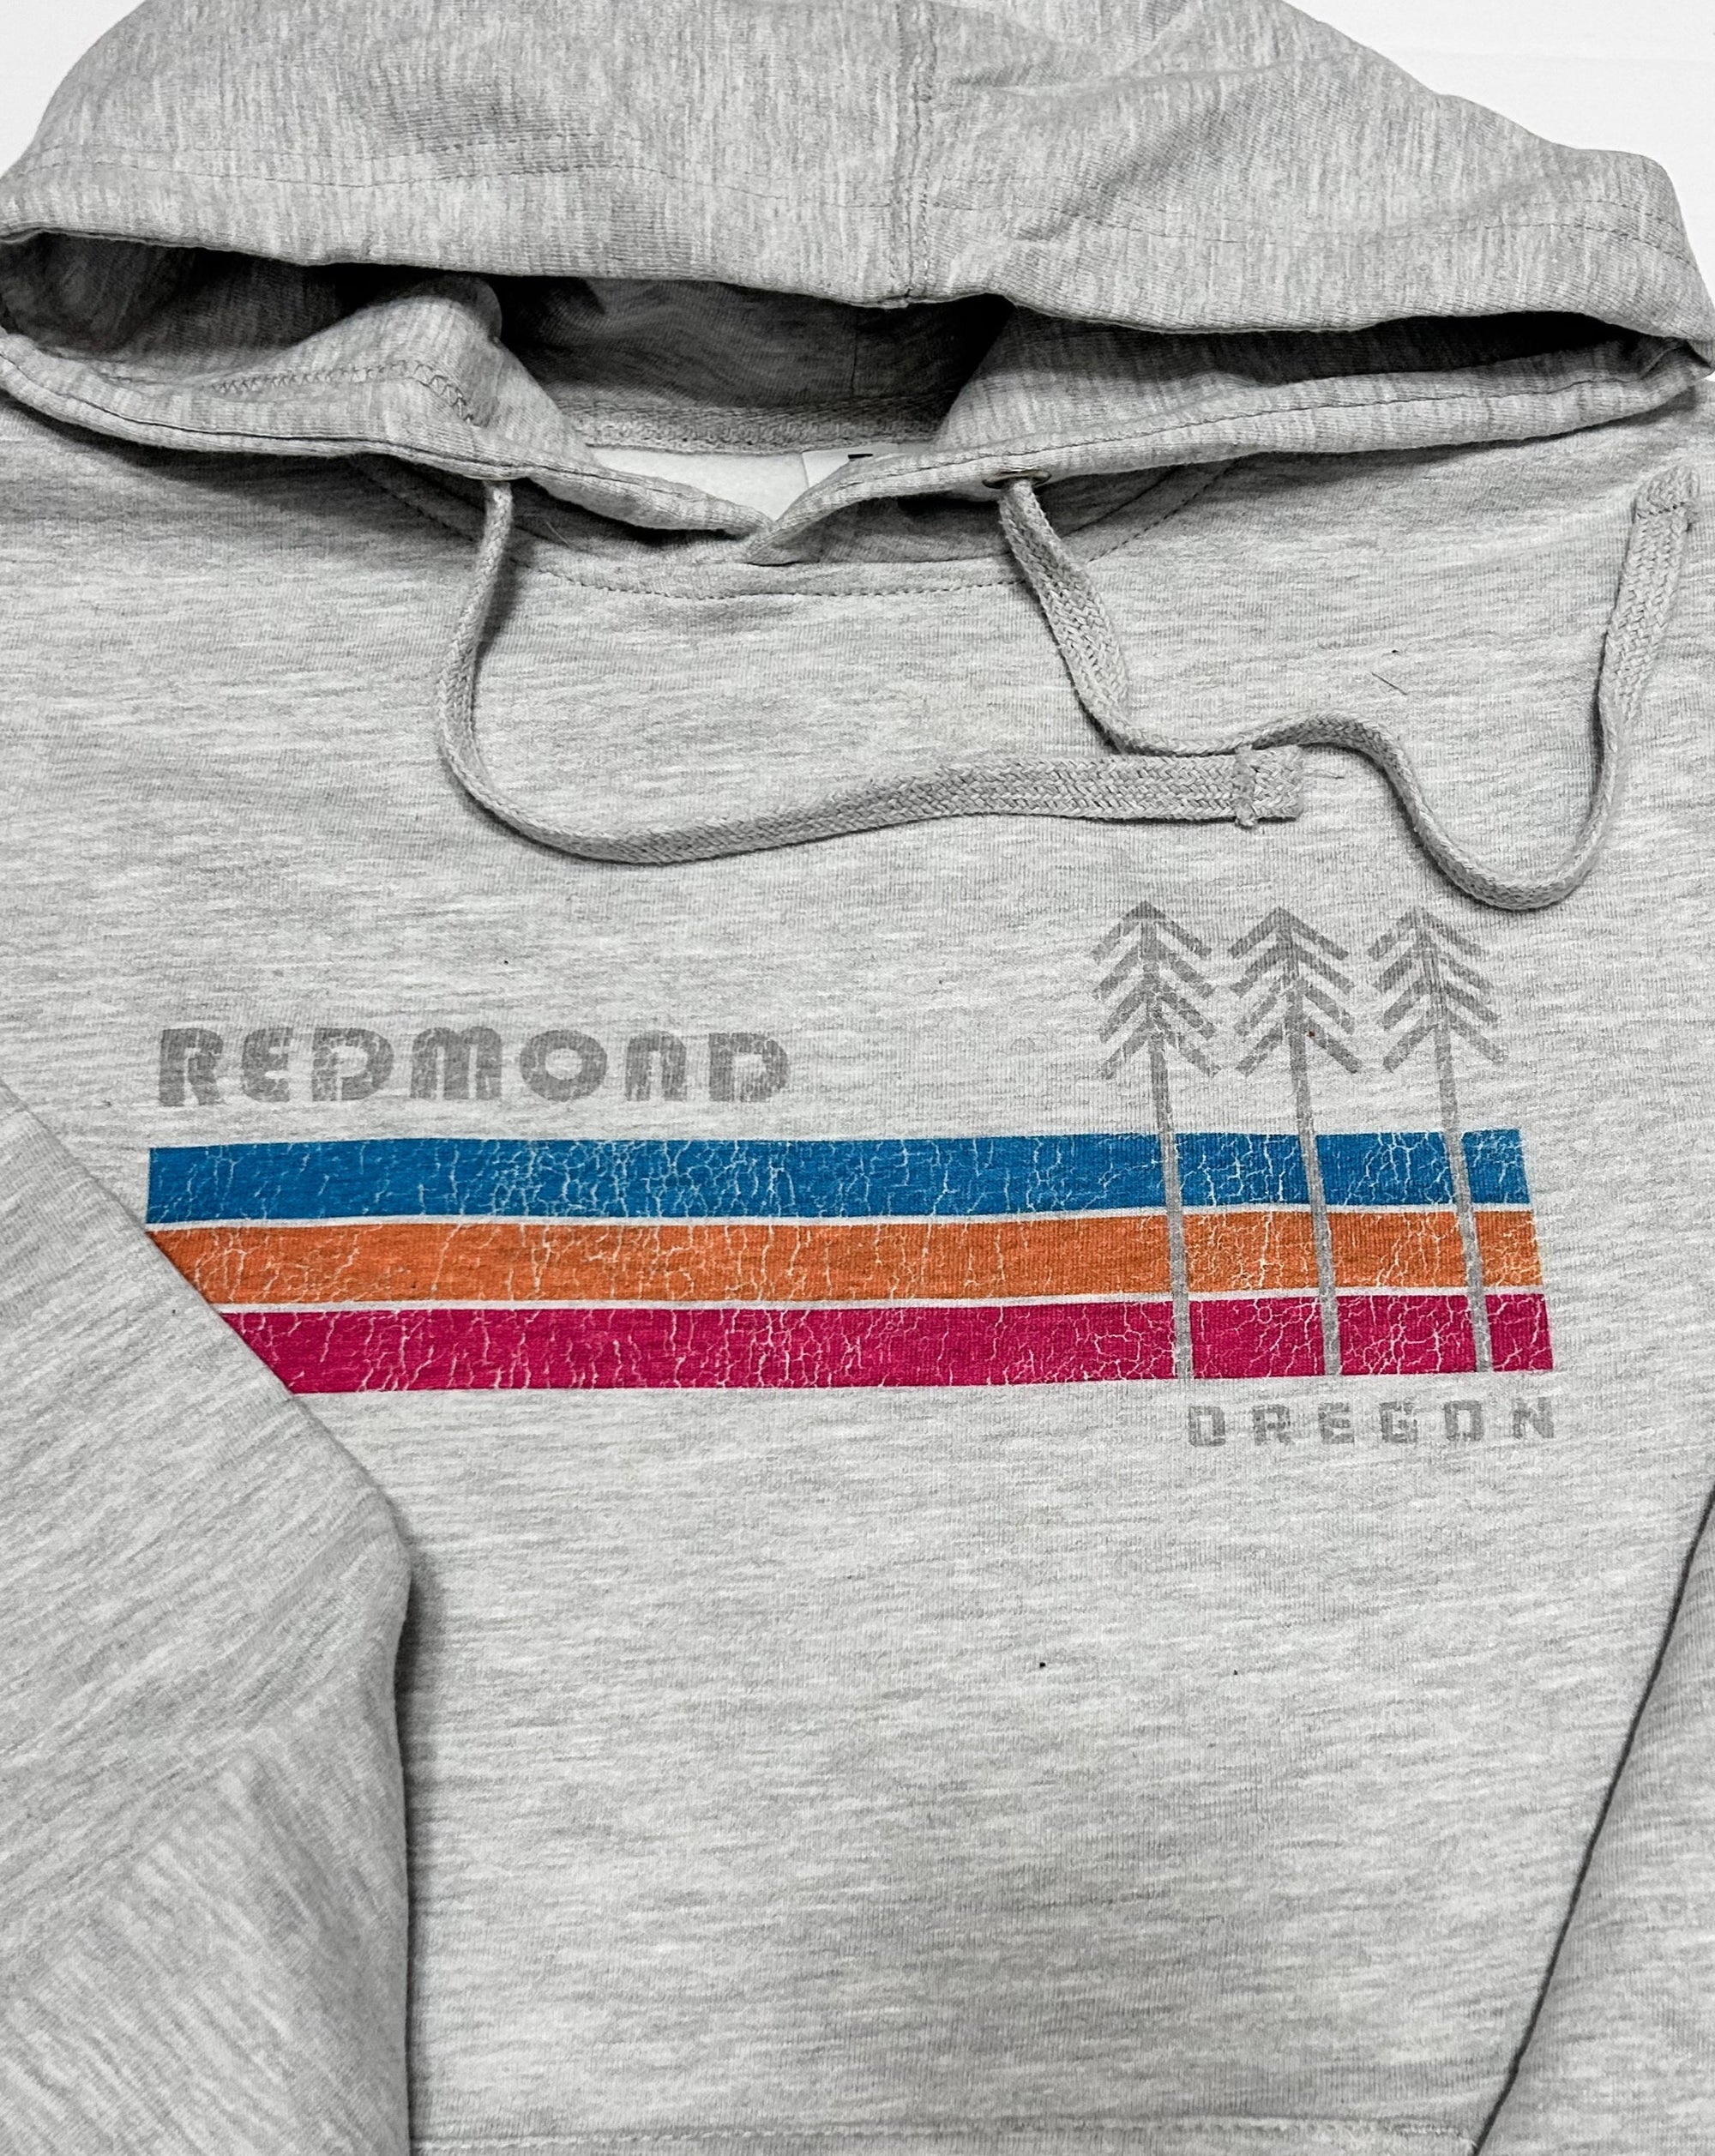 redmond stripe hoodie